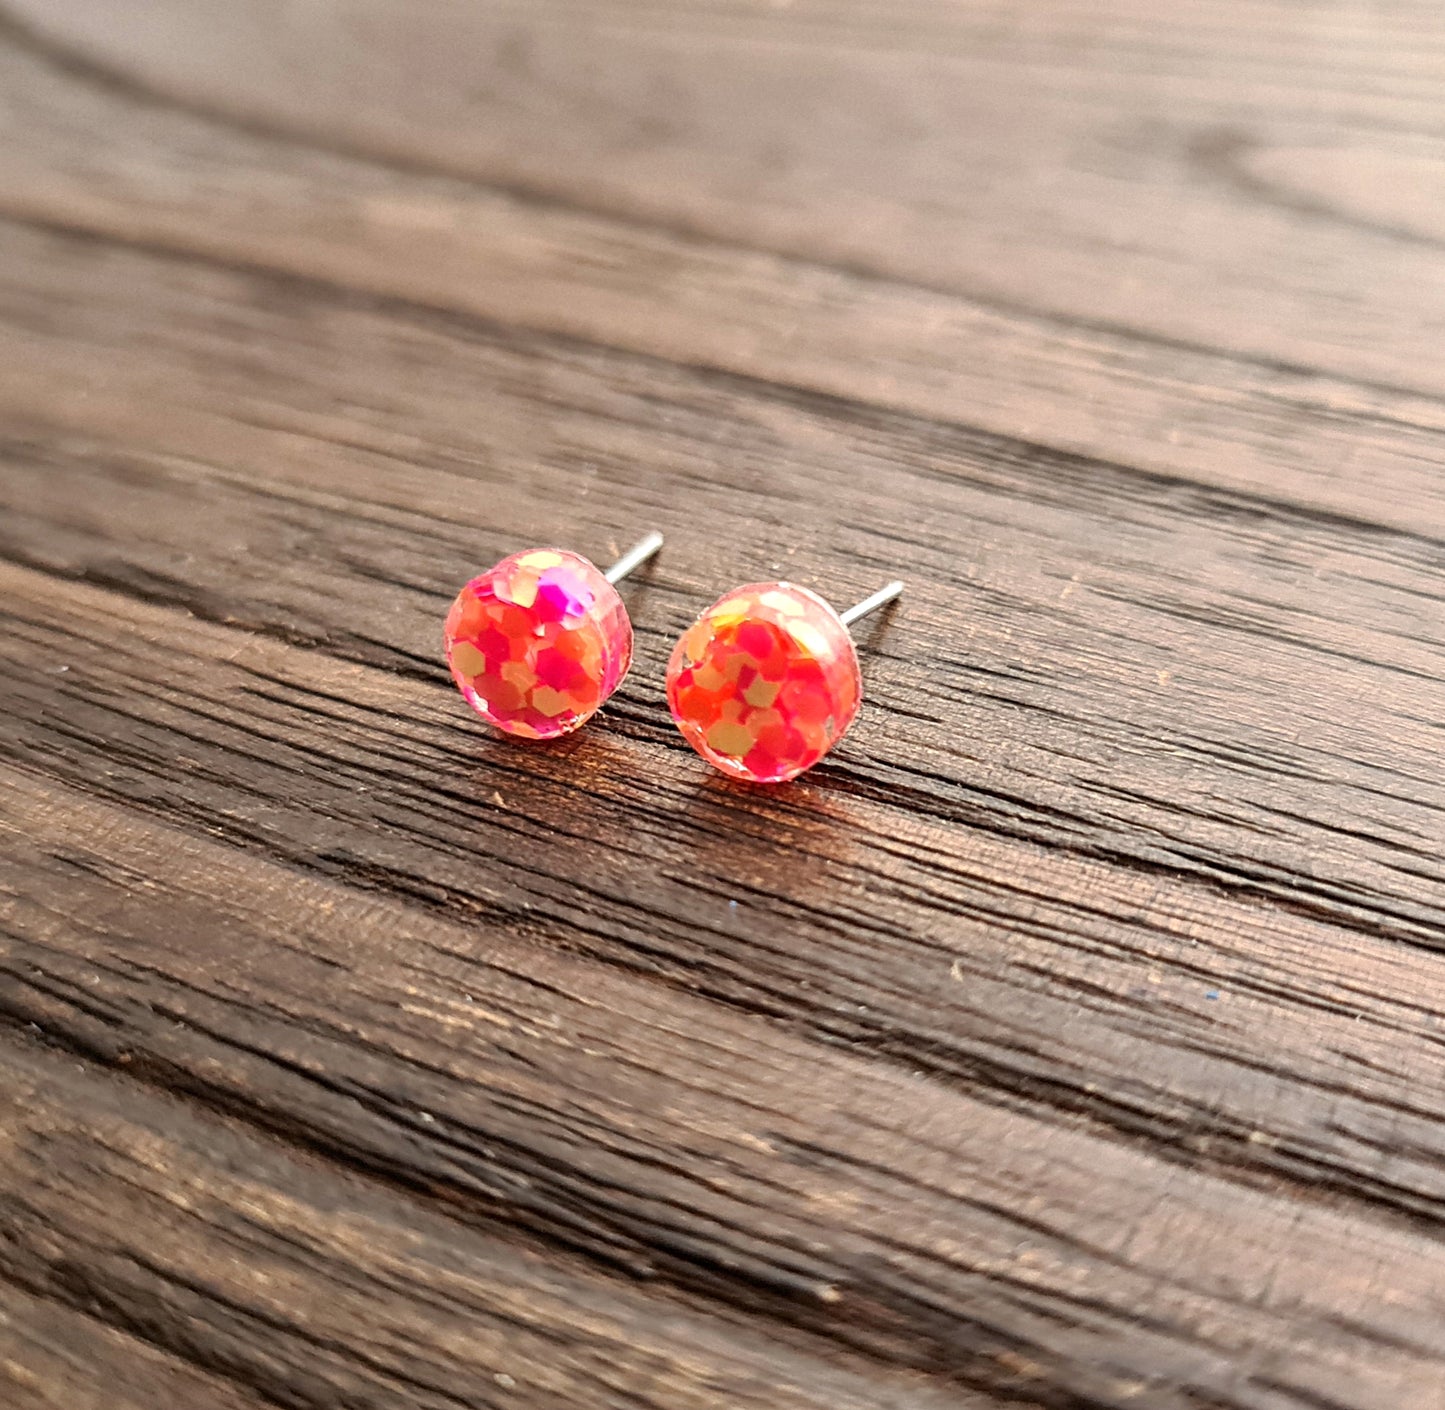 Circle Dot Resin Stud Earrings, Neon Pink Orange Yellow Glitter Earrings. Stainless Steel Stud Earrings. 8mm